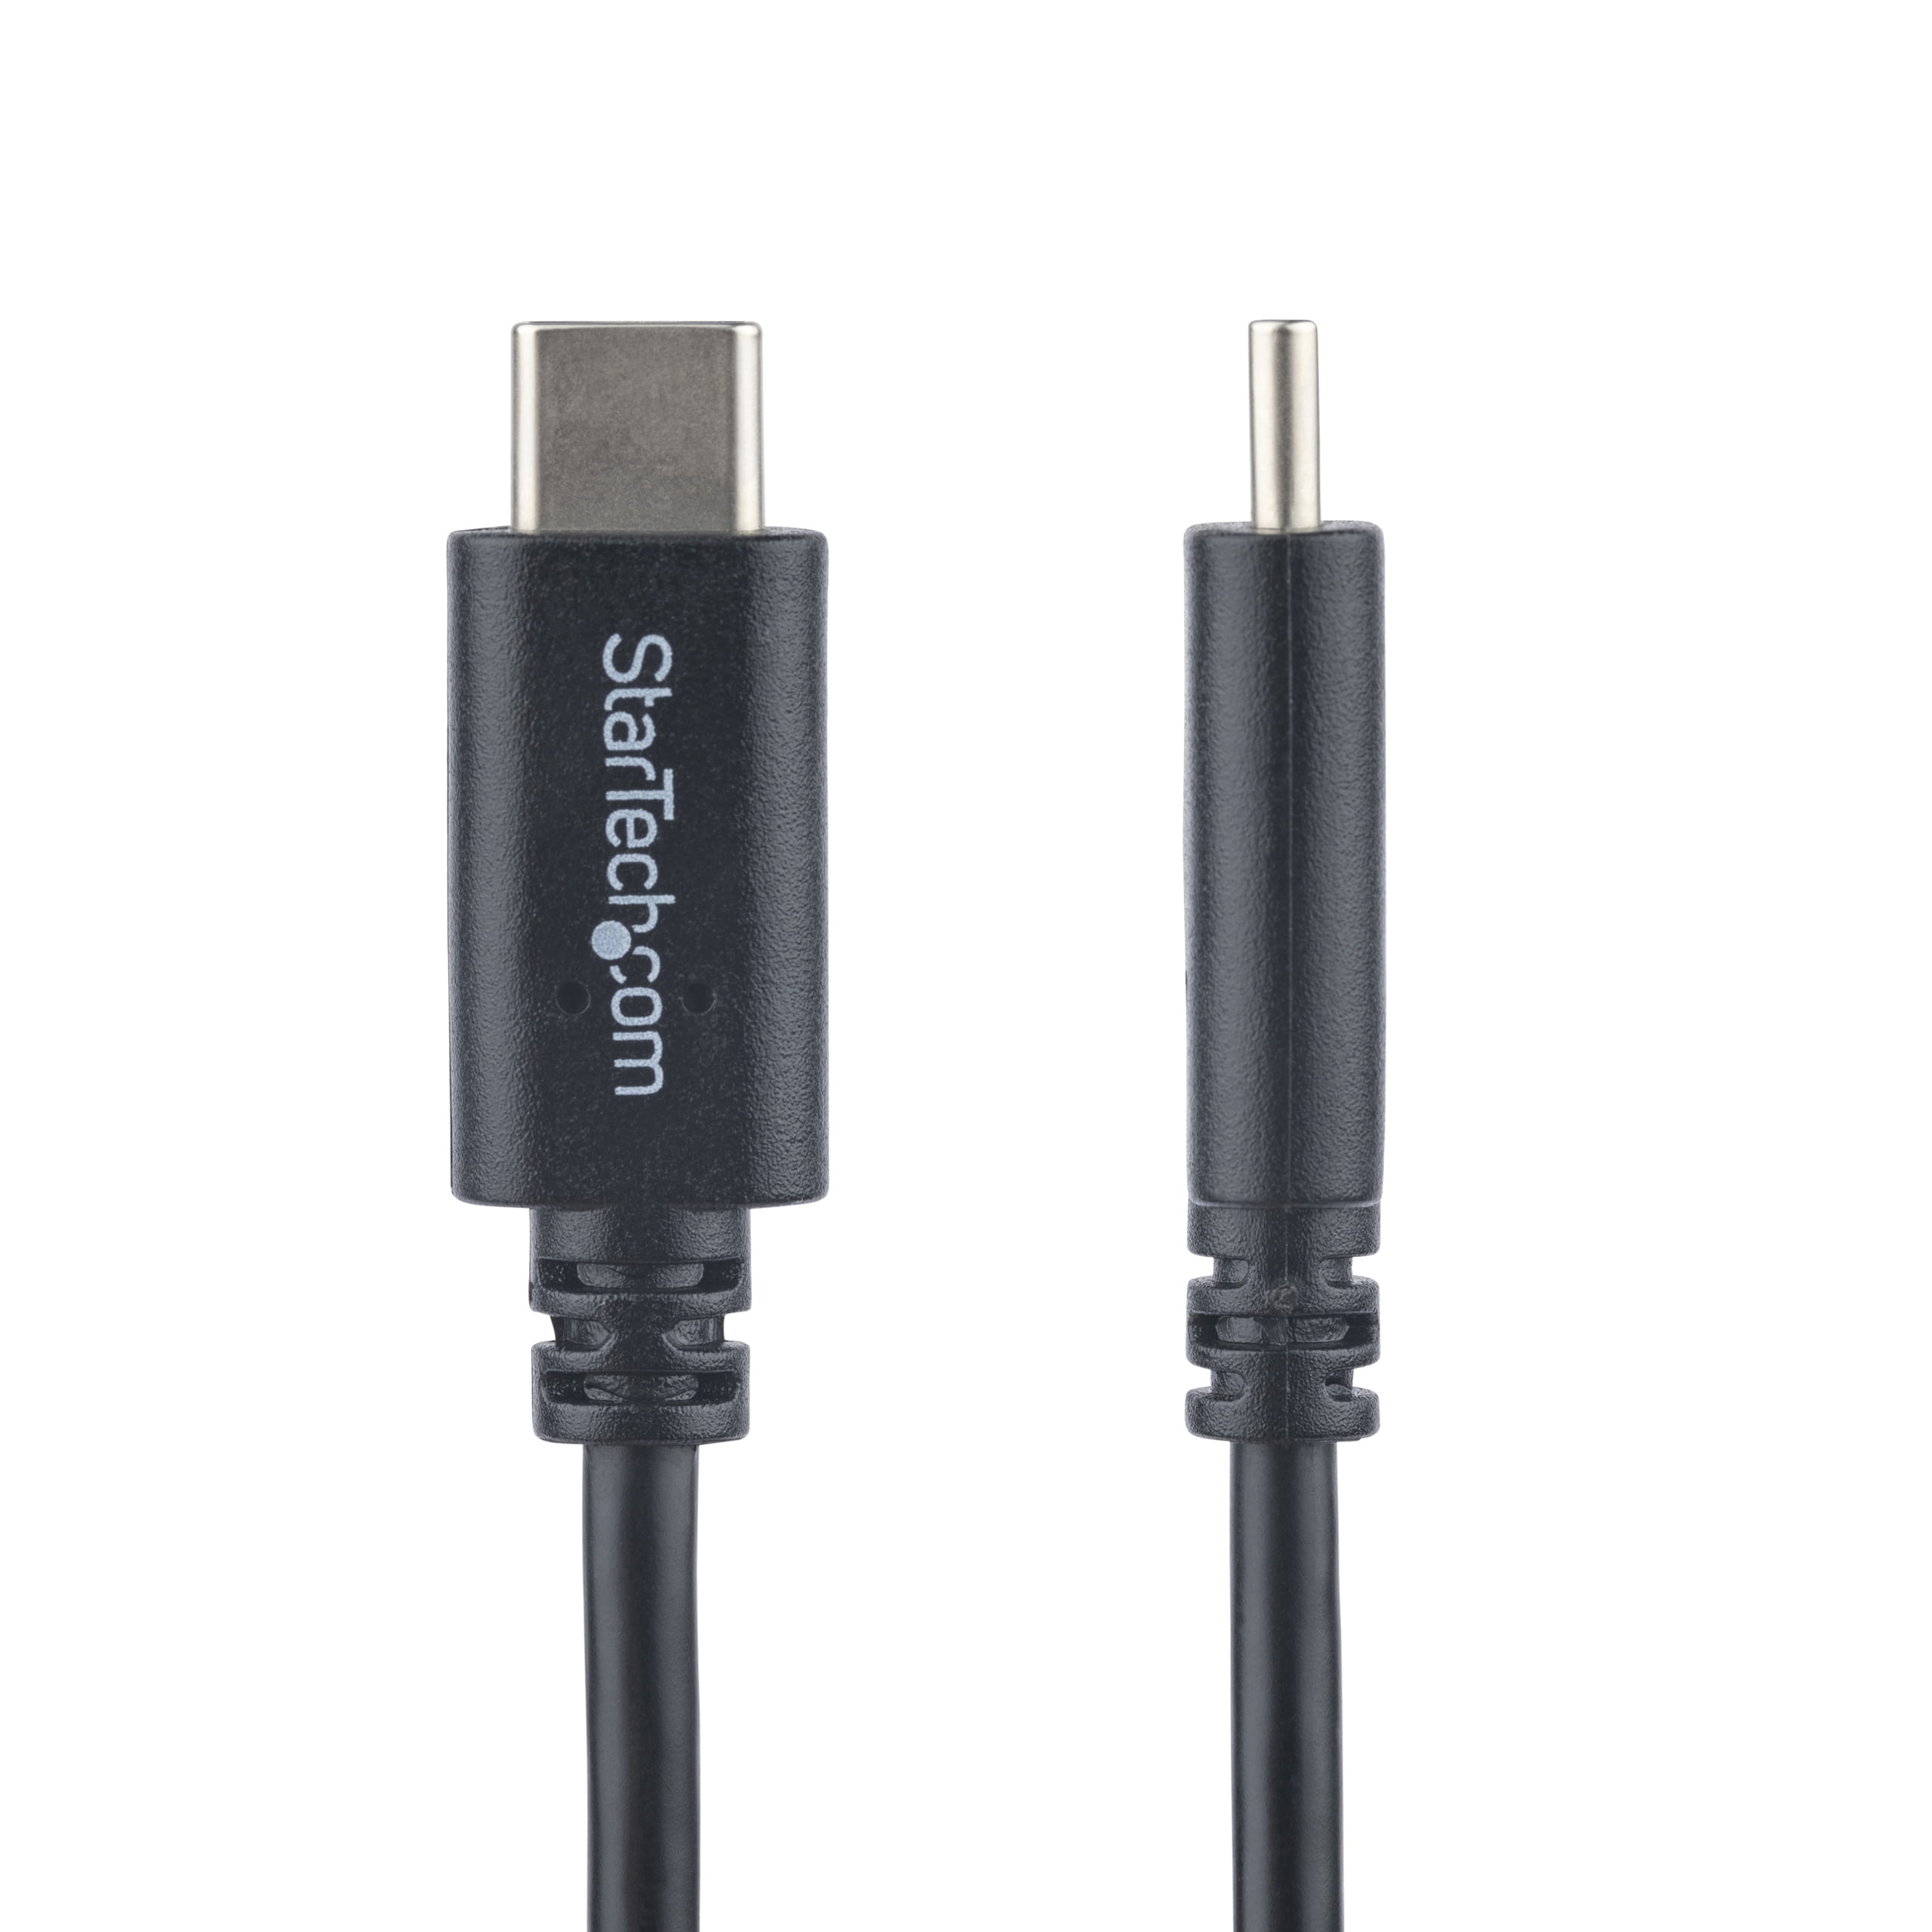 StarTech.com USB-C Kabel 2m - St/St - USB 2.0 - USB Type-C Kabel - Kompatibel mit  Geräten wie z.B: Apple MacBook, Dell XPS, Nexus 6P / 5x - USB-Kabel - USB-C (M)